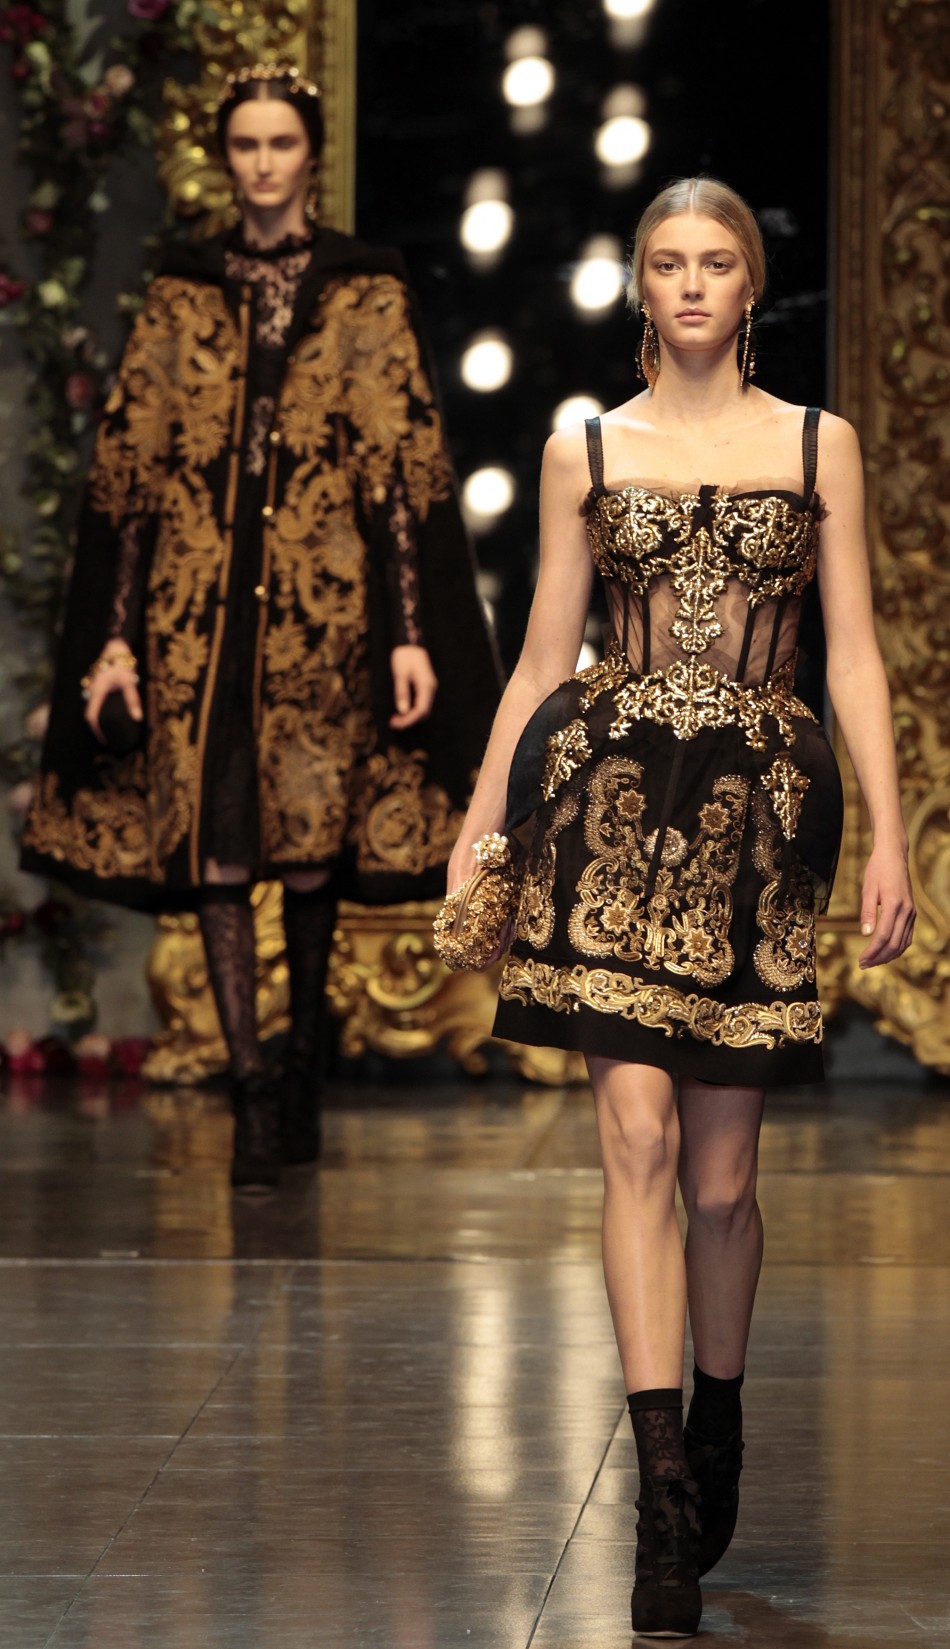 2012 Milan Fashion Week: Dolce & Gabbana's Baroque Romanticism [SLIDESHOW]